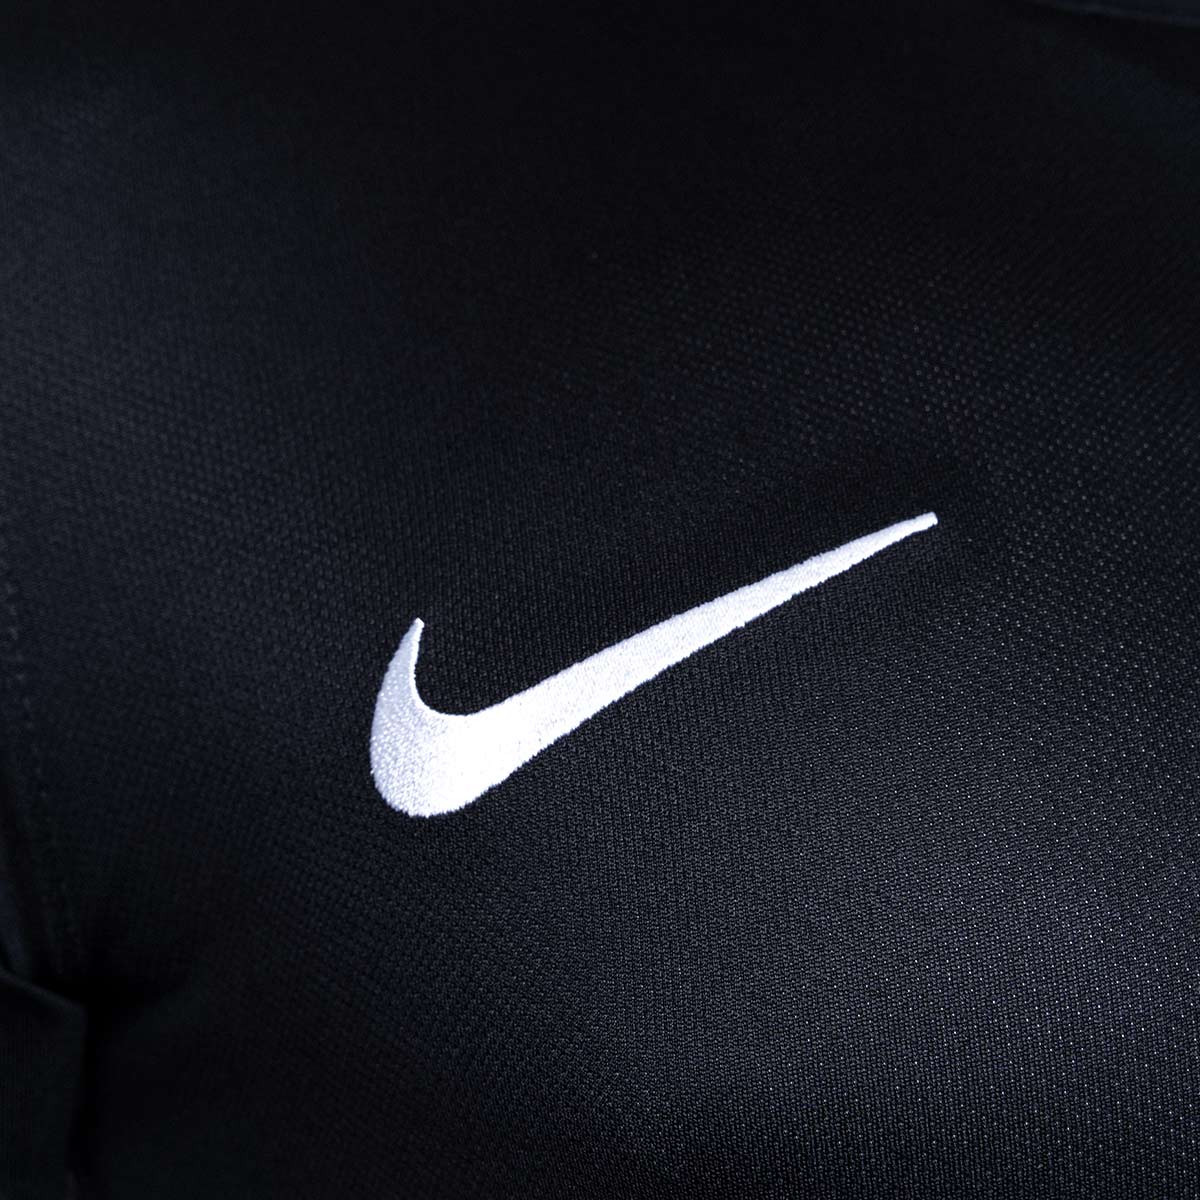 Camiseta Nike Industrias Garcia Santa Segunda Equipación 2022-2023 Black-White - Fútbol Emotion